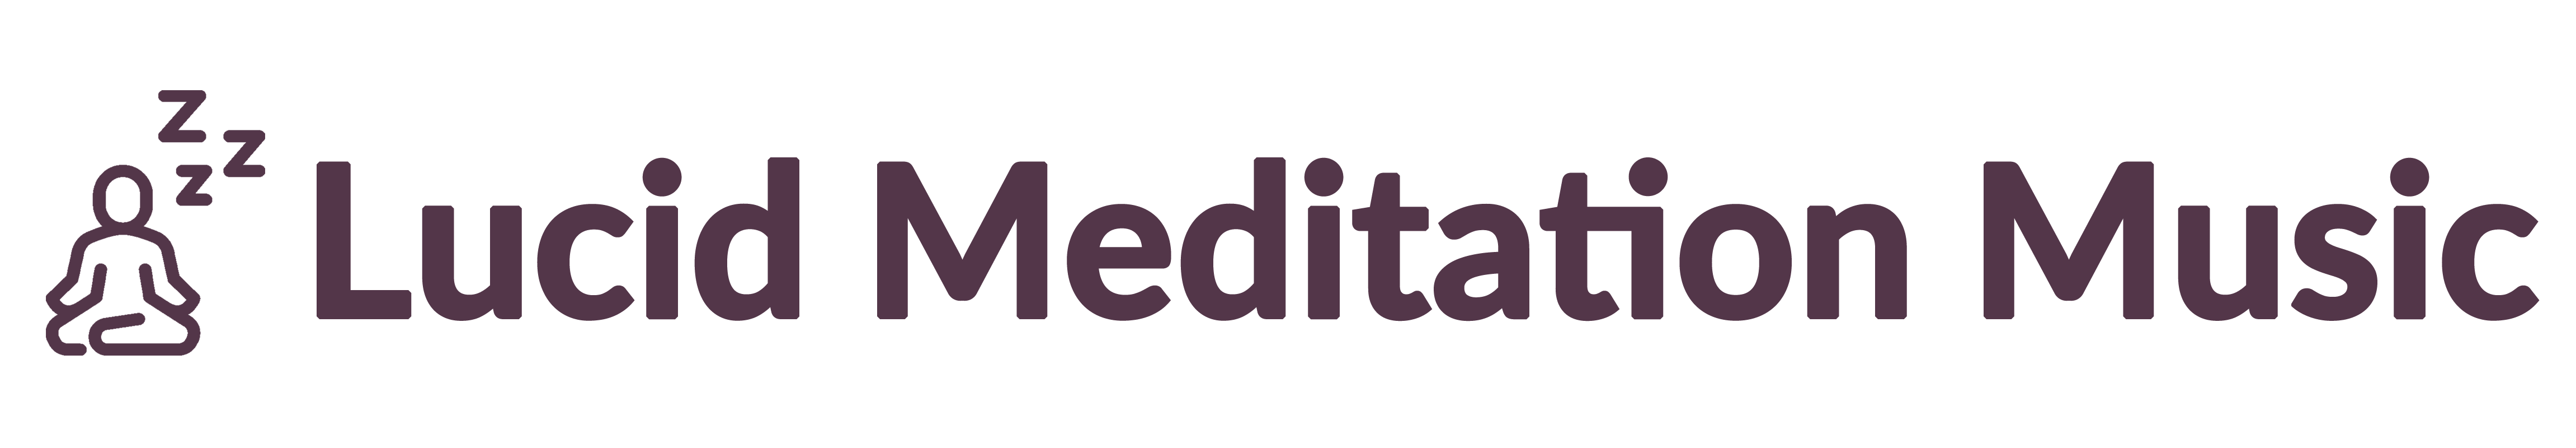 Lucid-Meditation-Music-logo